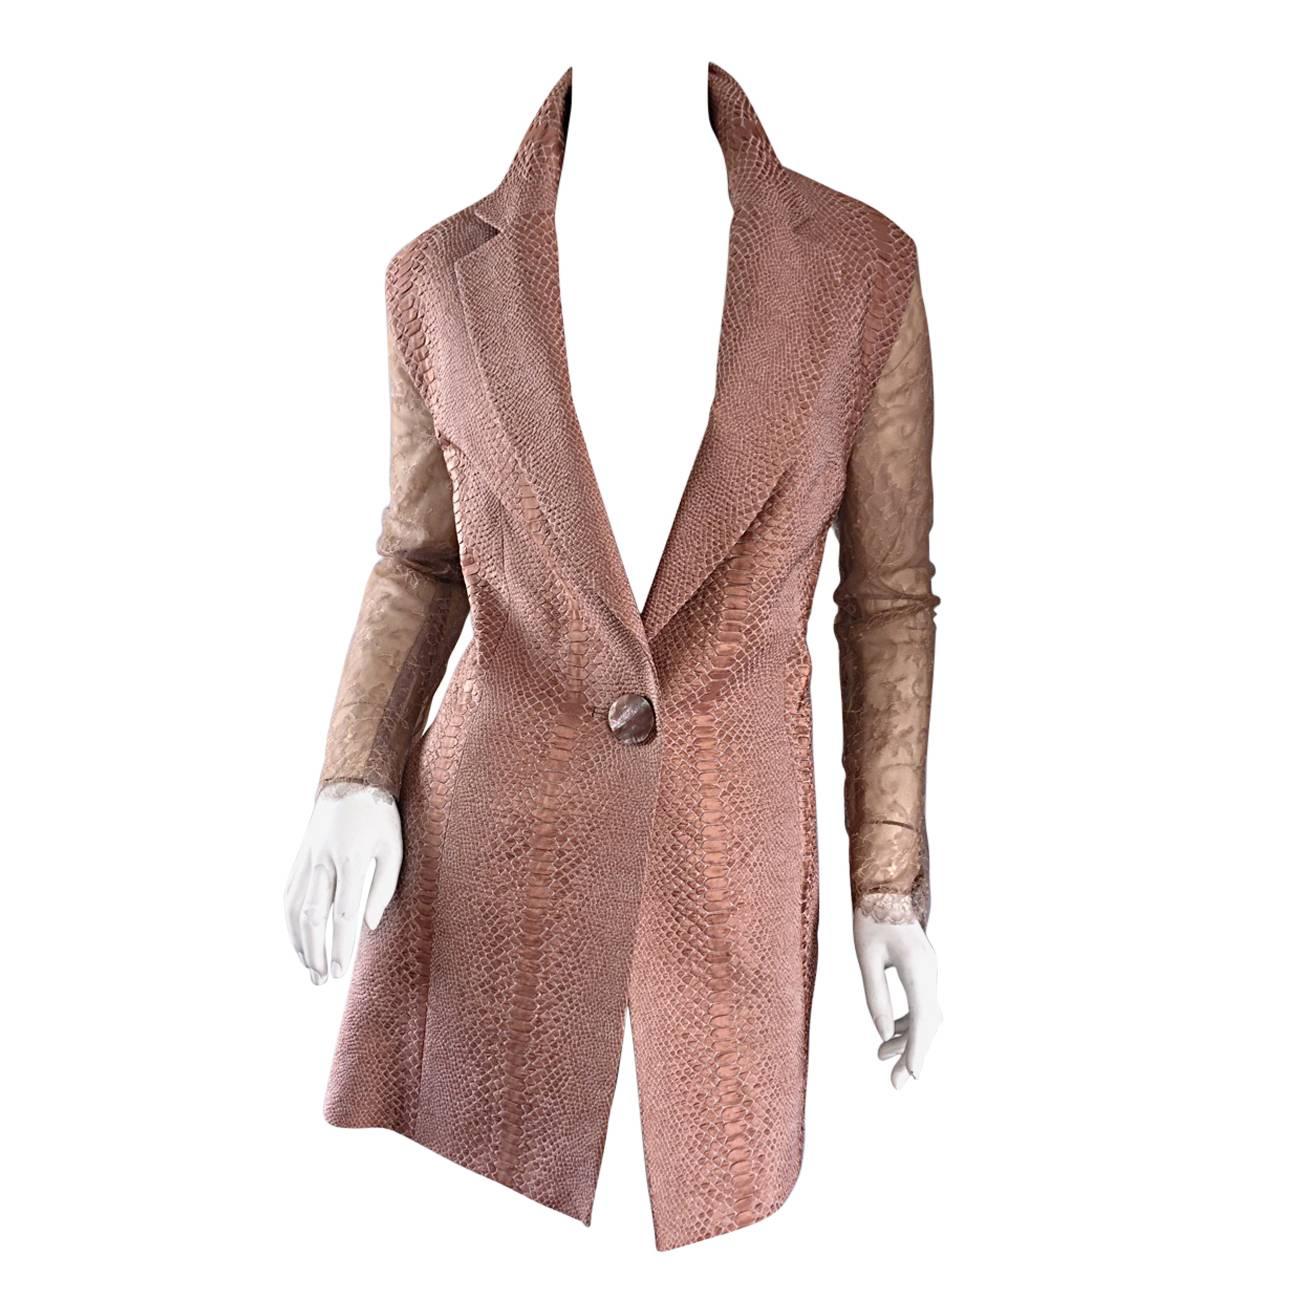 Gianfranco Ferre Vintage 1990s Pink + Nude Snakeskin + Lace Silk Blazer Jacket